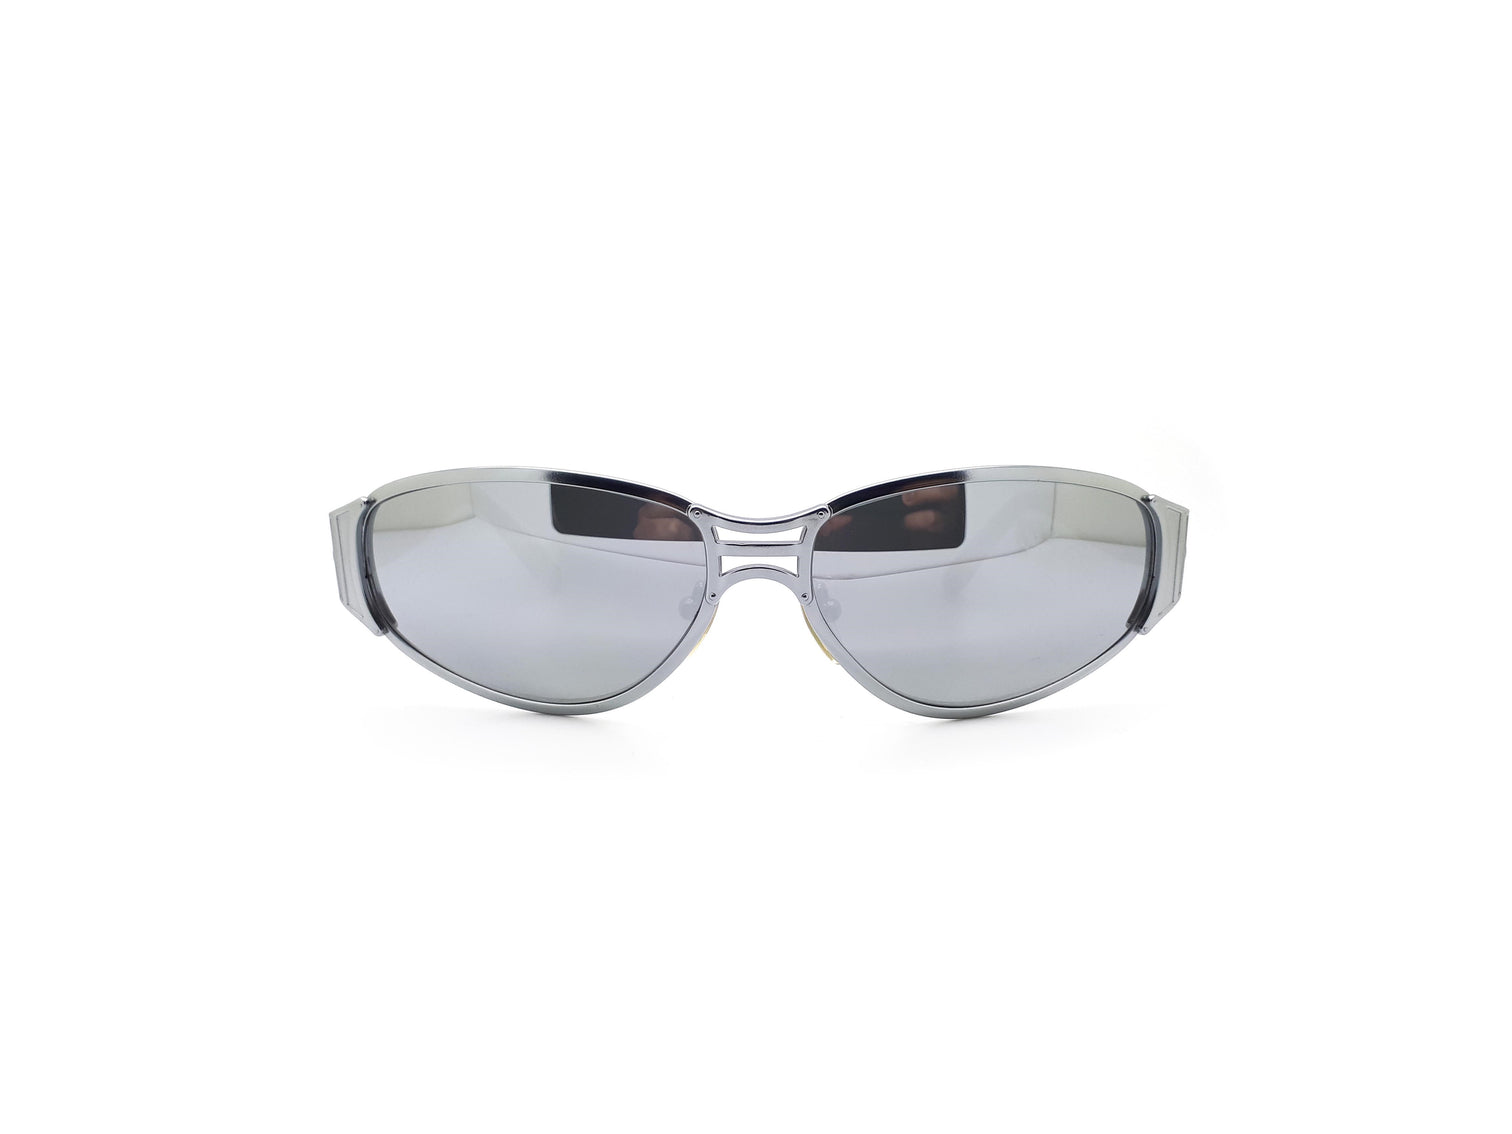 Jean Paul Gaultier Vintage Sunglasses, Glasses and Frames – Ed & Sarna ...